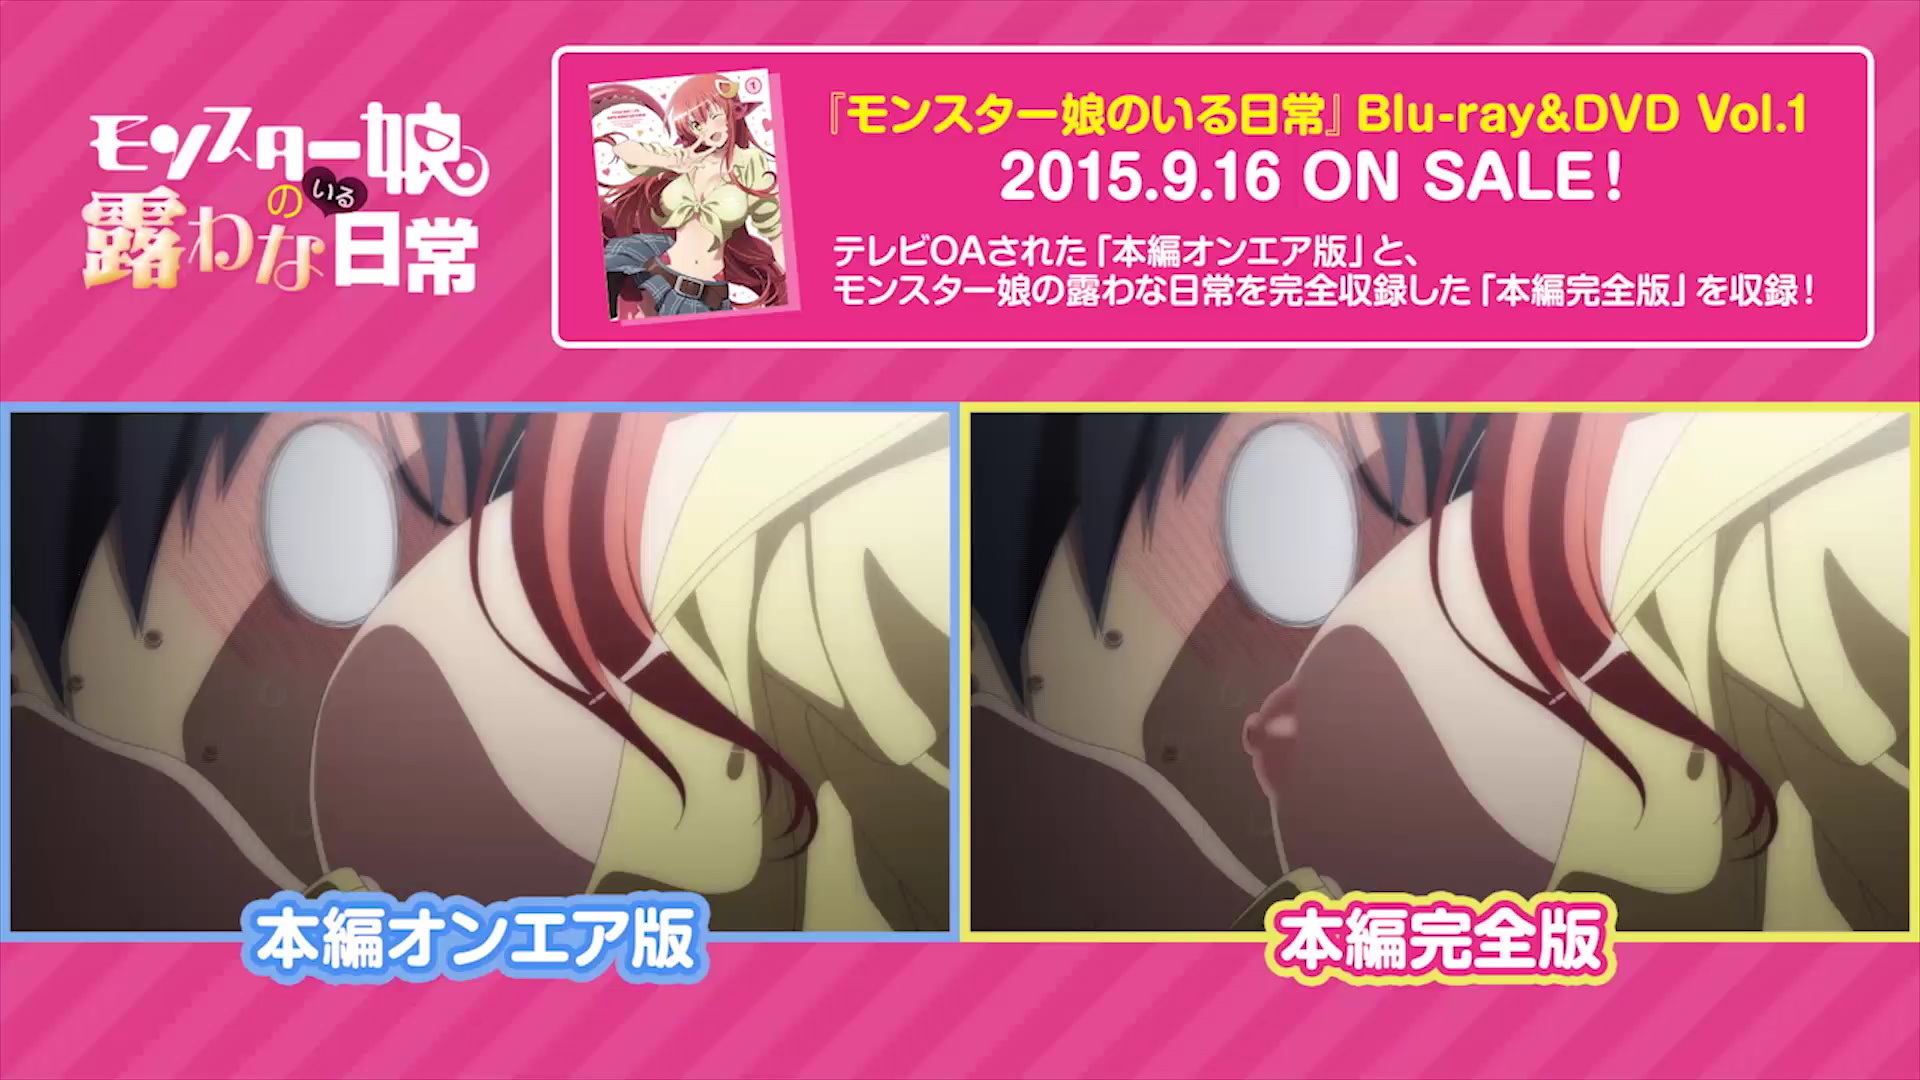 TV vs Blu-Ray Monster Musume anime blu-ray volume 1 uncensored 4